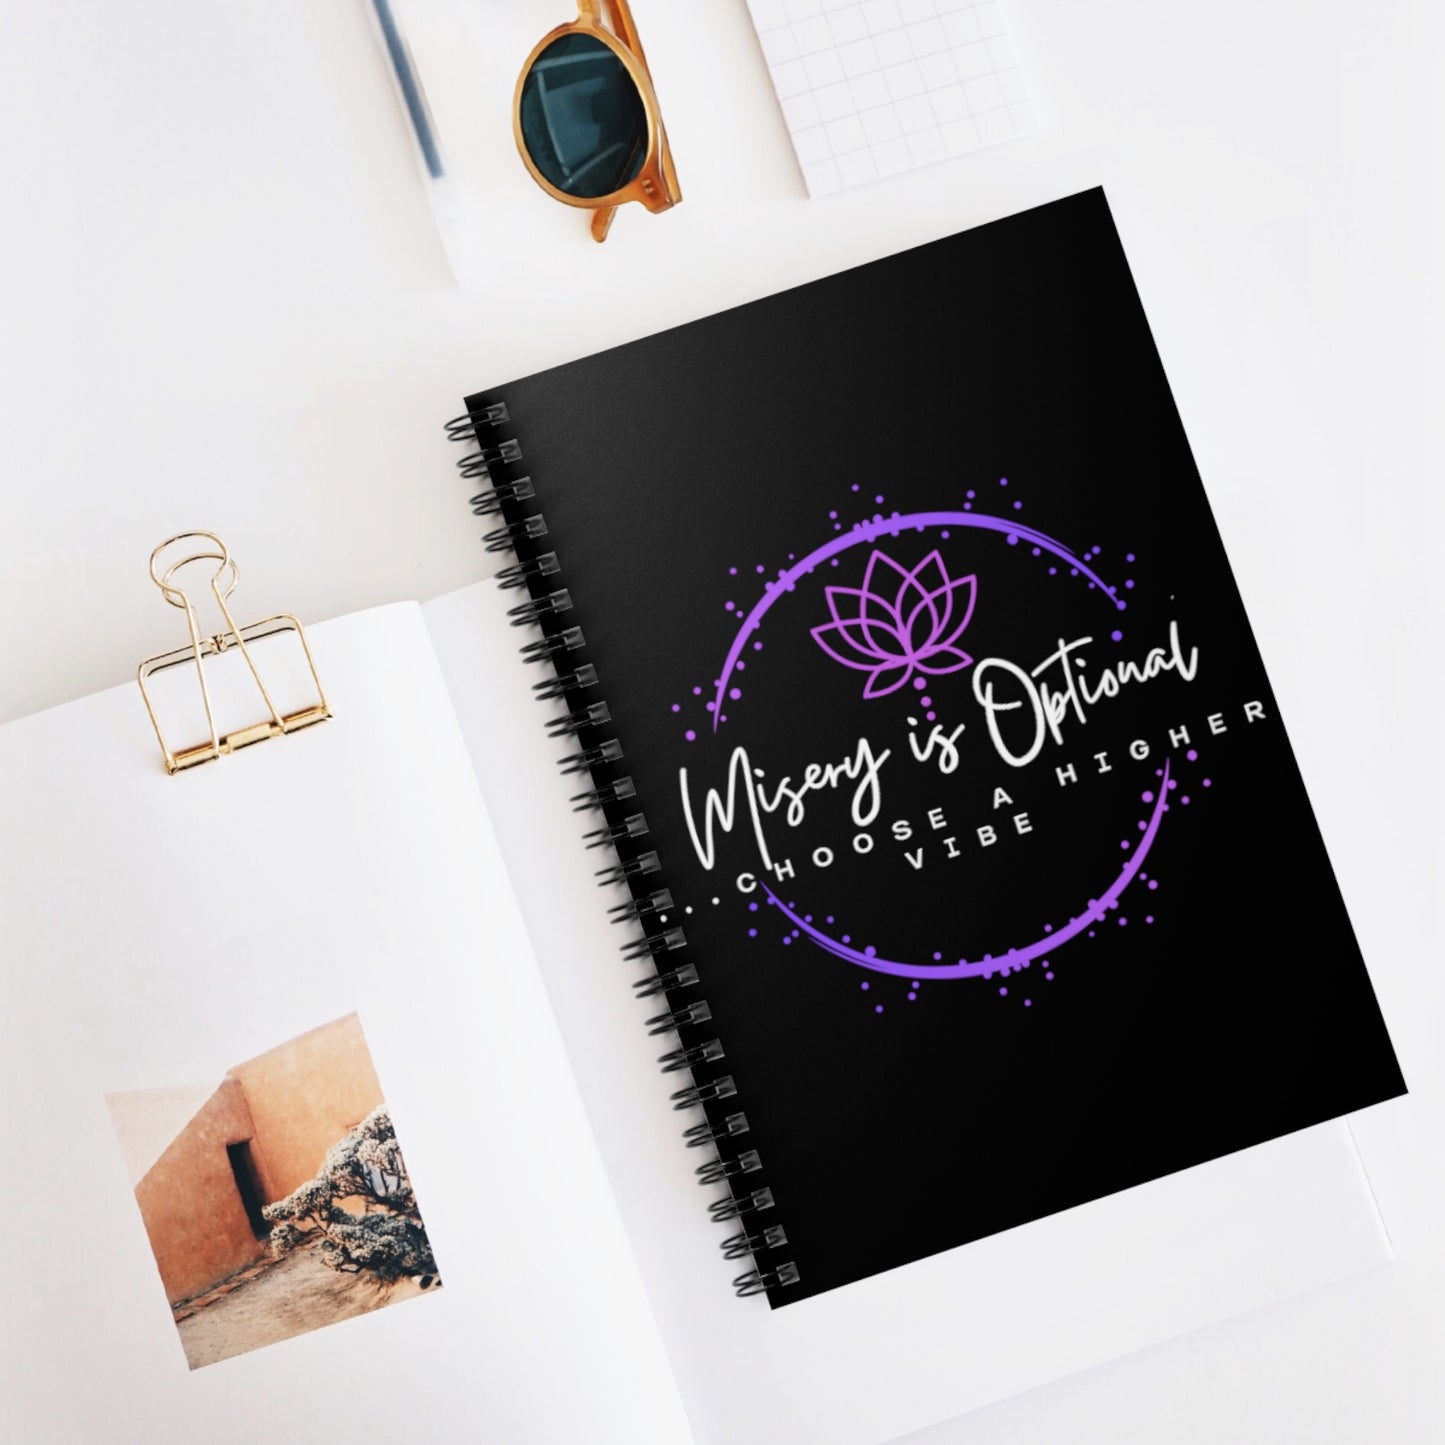 Dreams & Plans - Inspirational Spiral Notebook